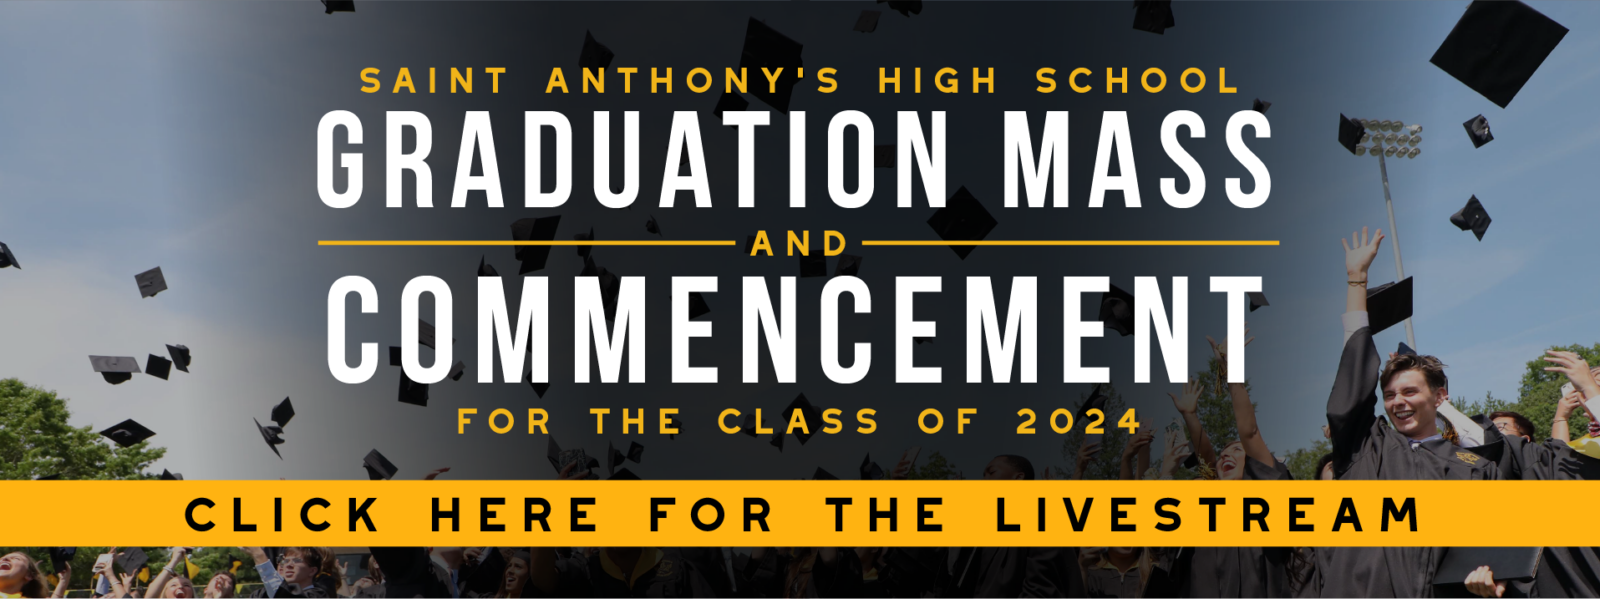 graduation-website-2024-banner